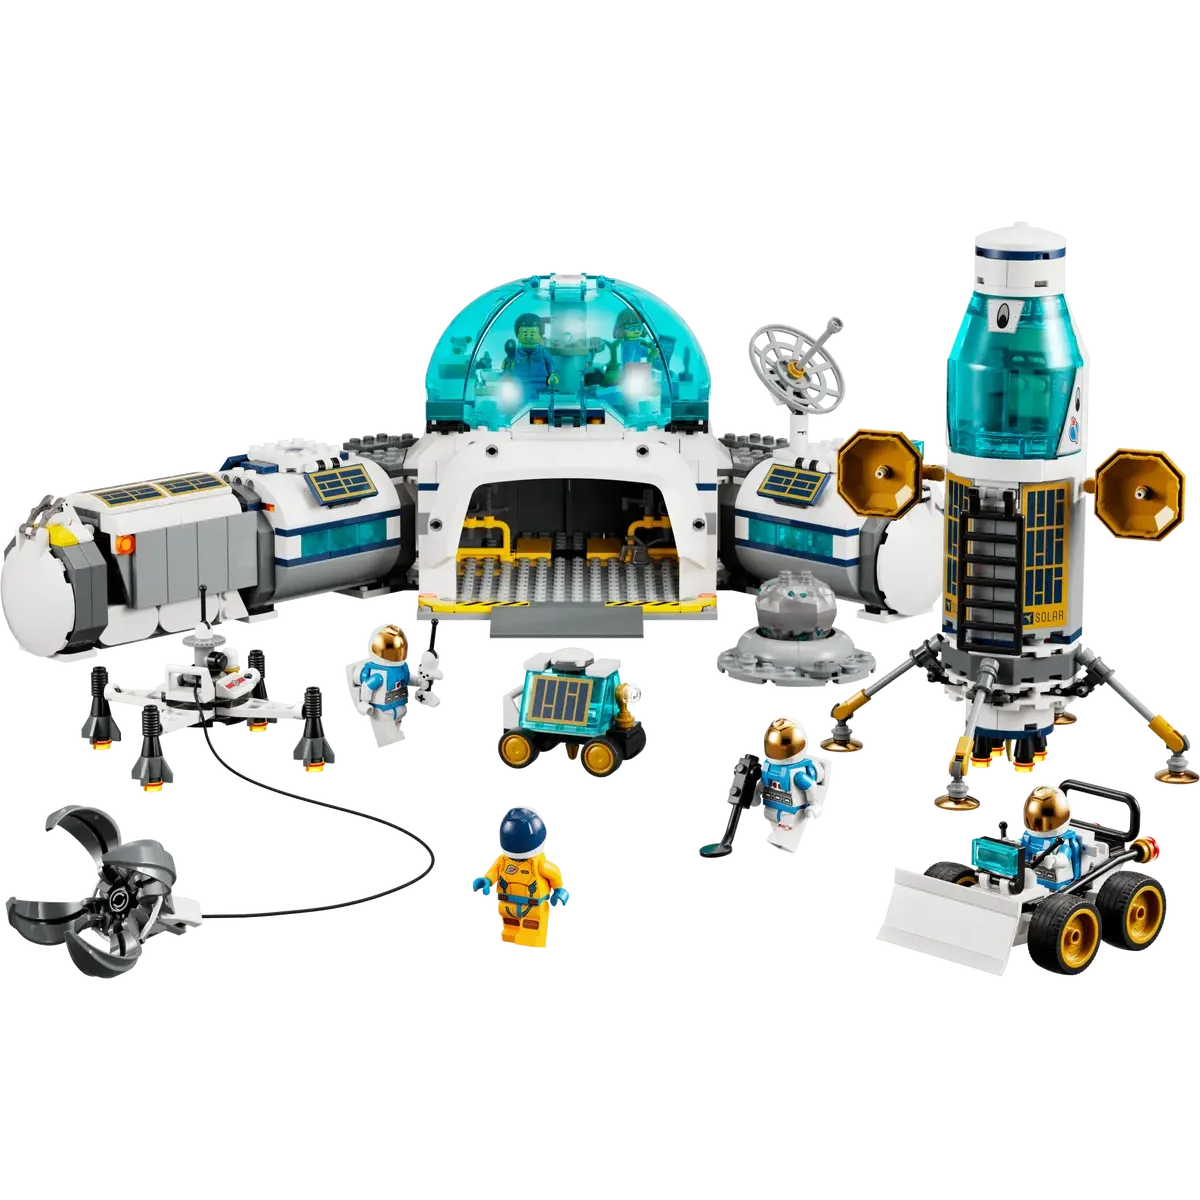 Lunar Research Base - LEGO City